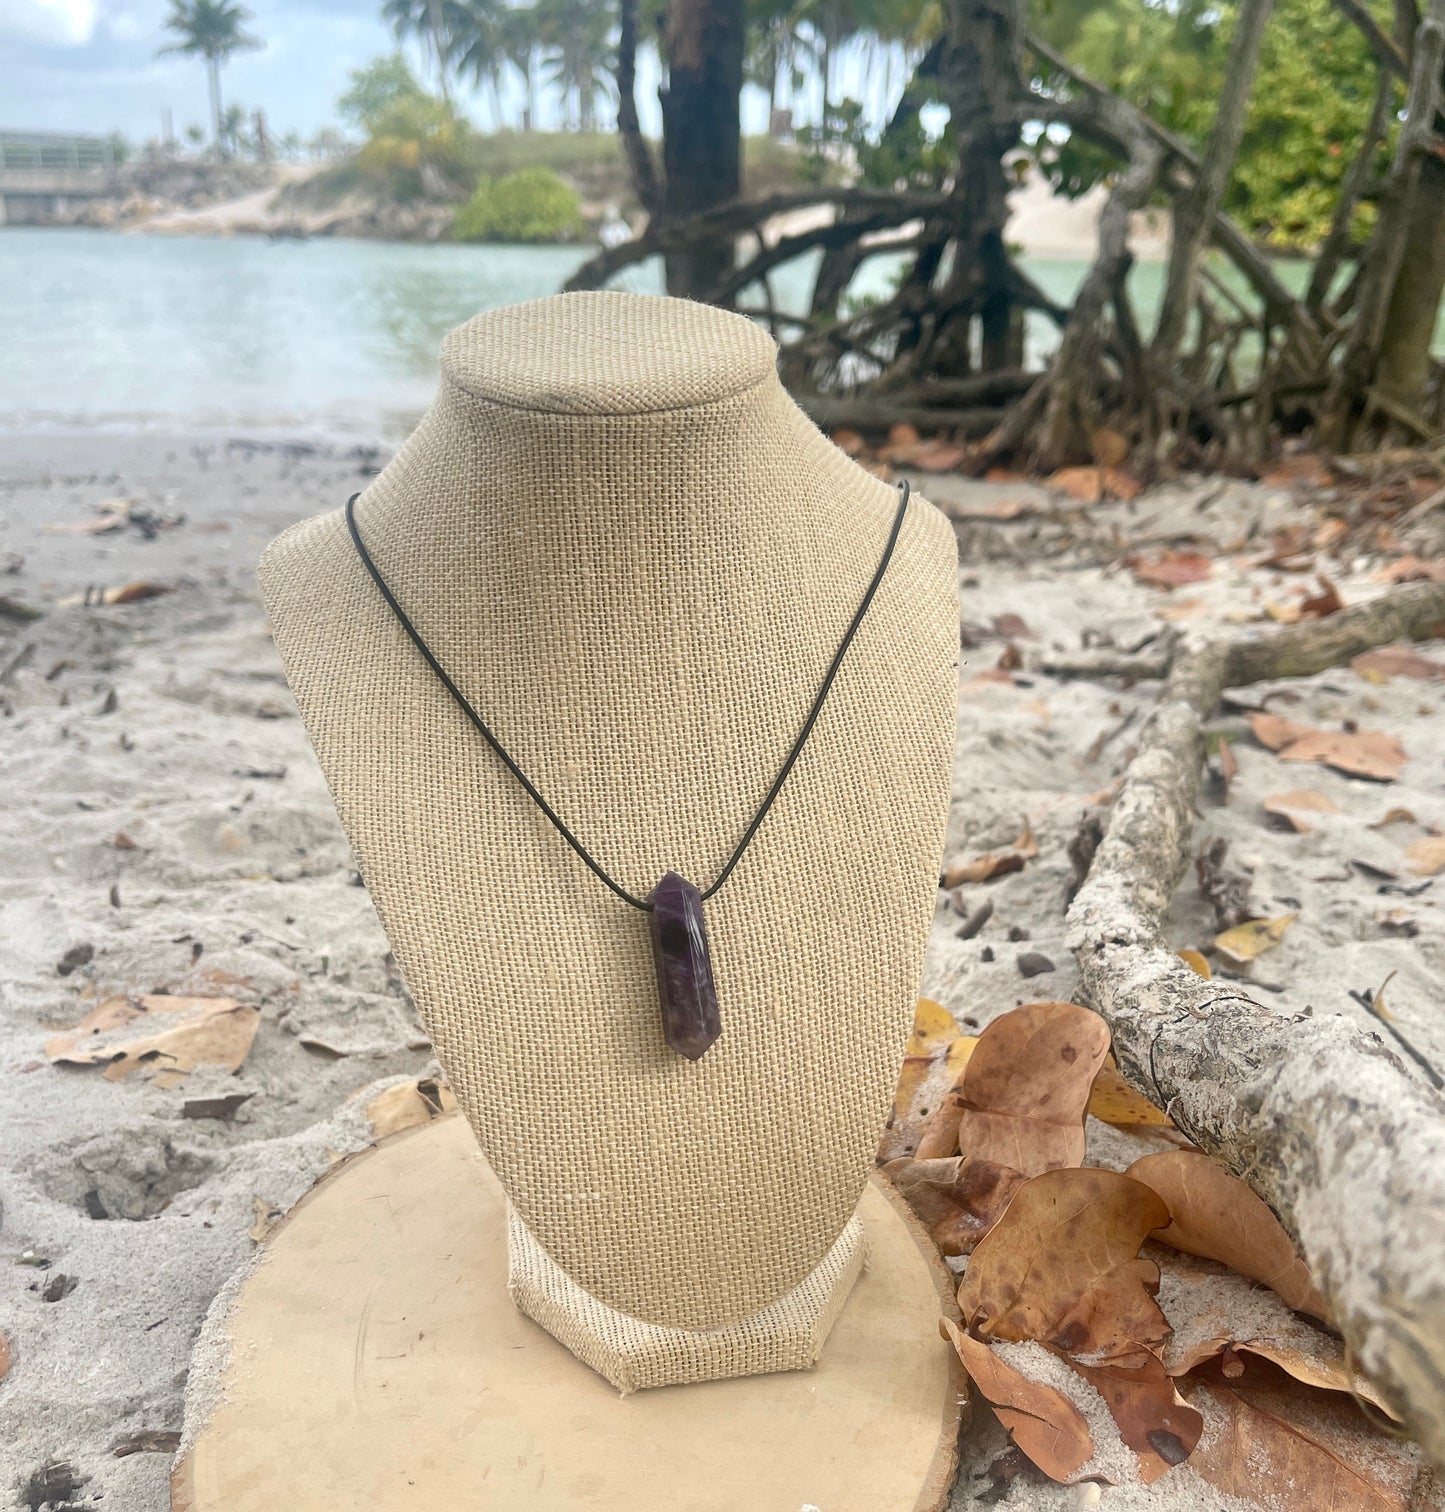 "Stargazer" Purple Amethyst Crystal Leather Necklace